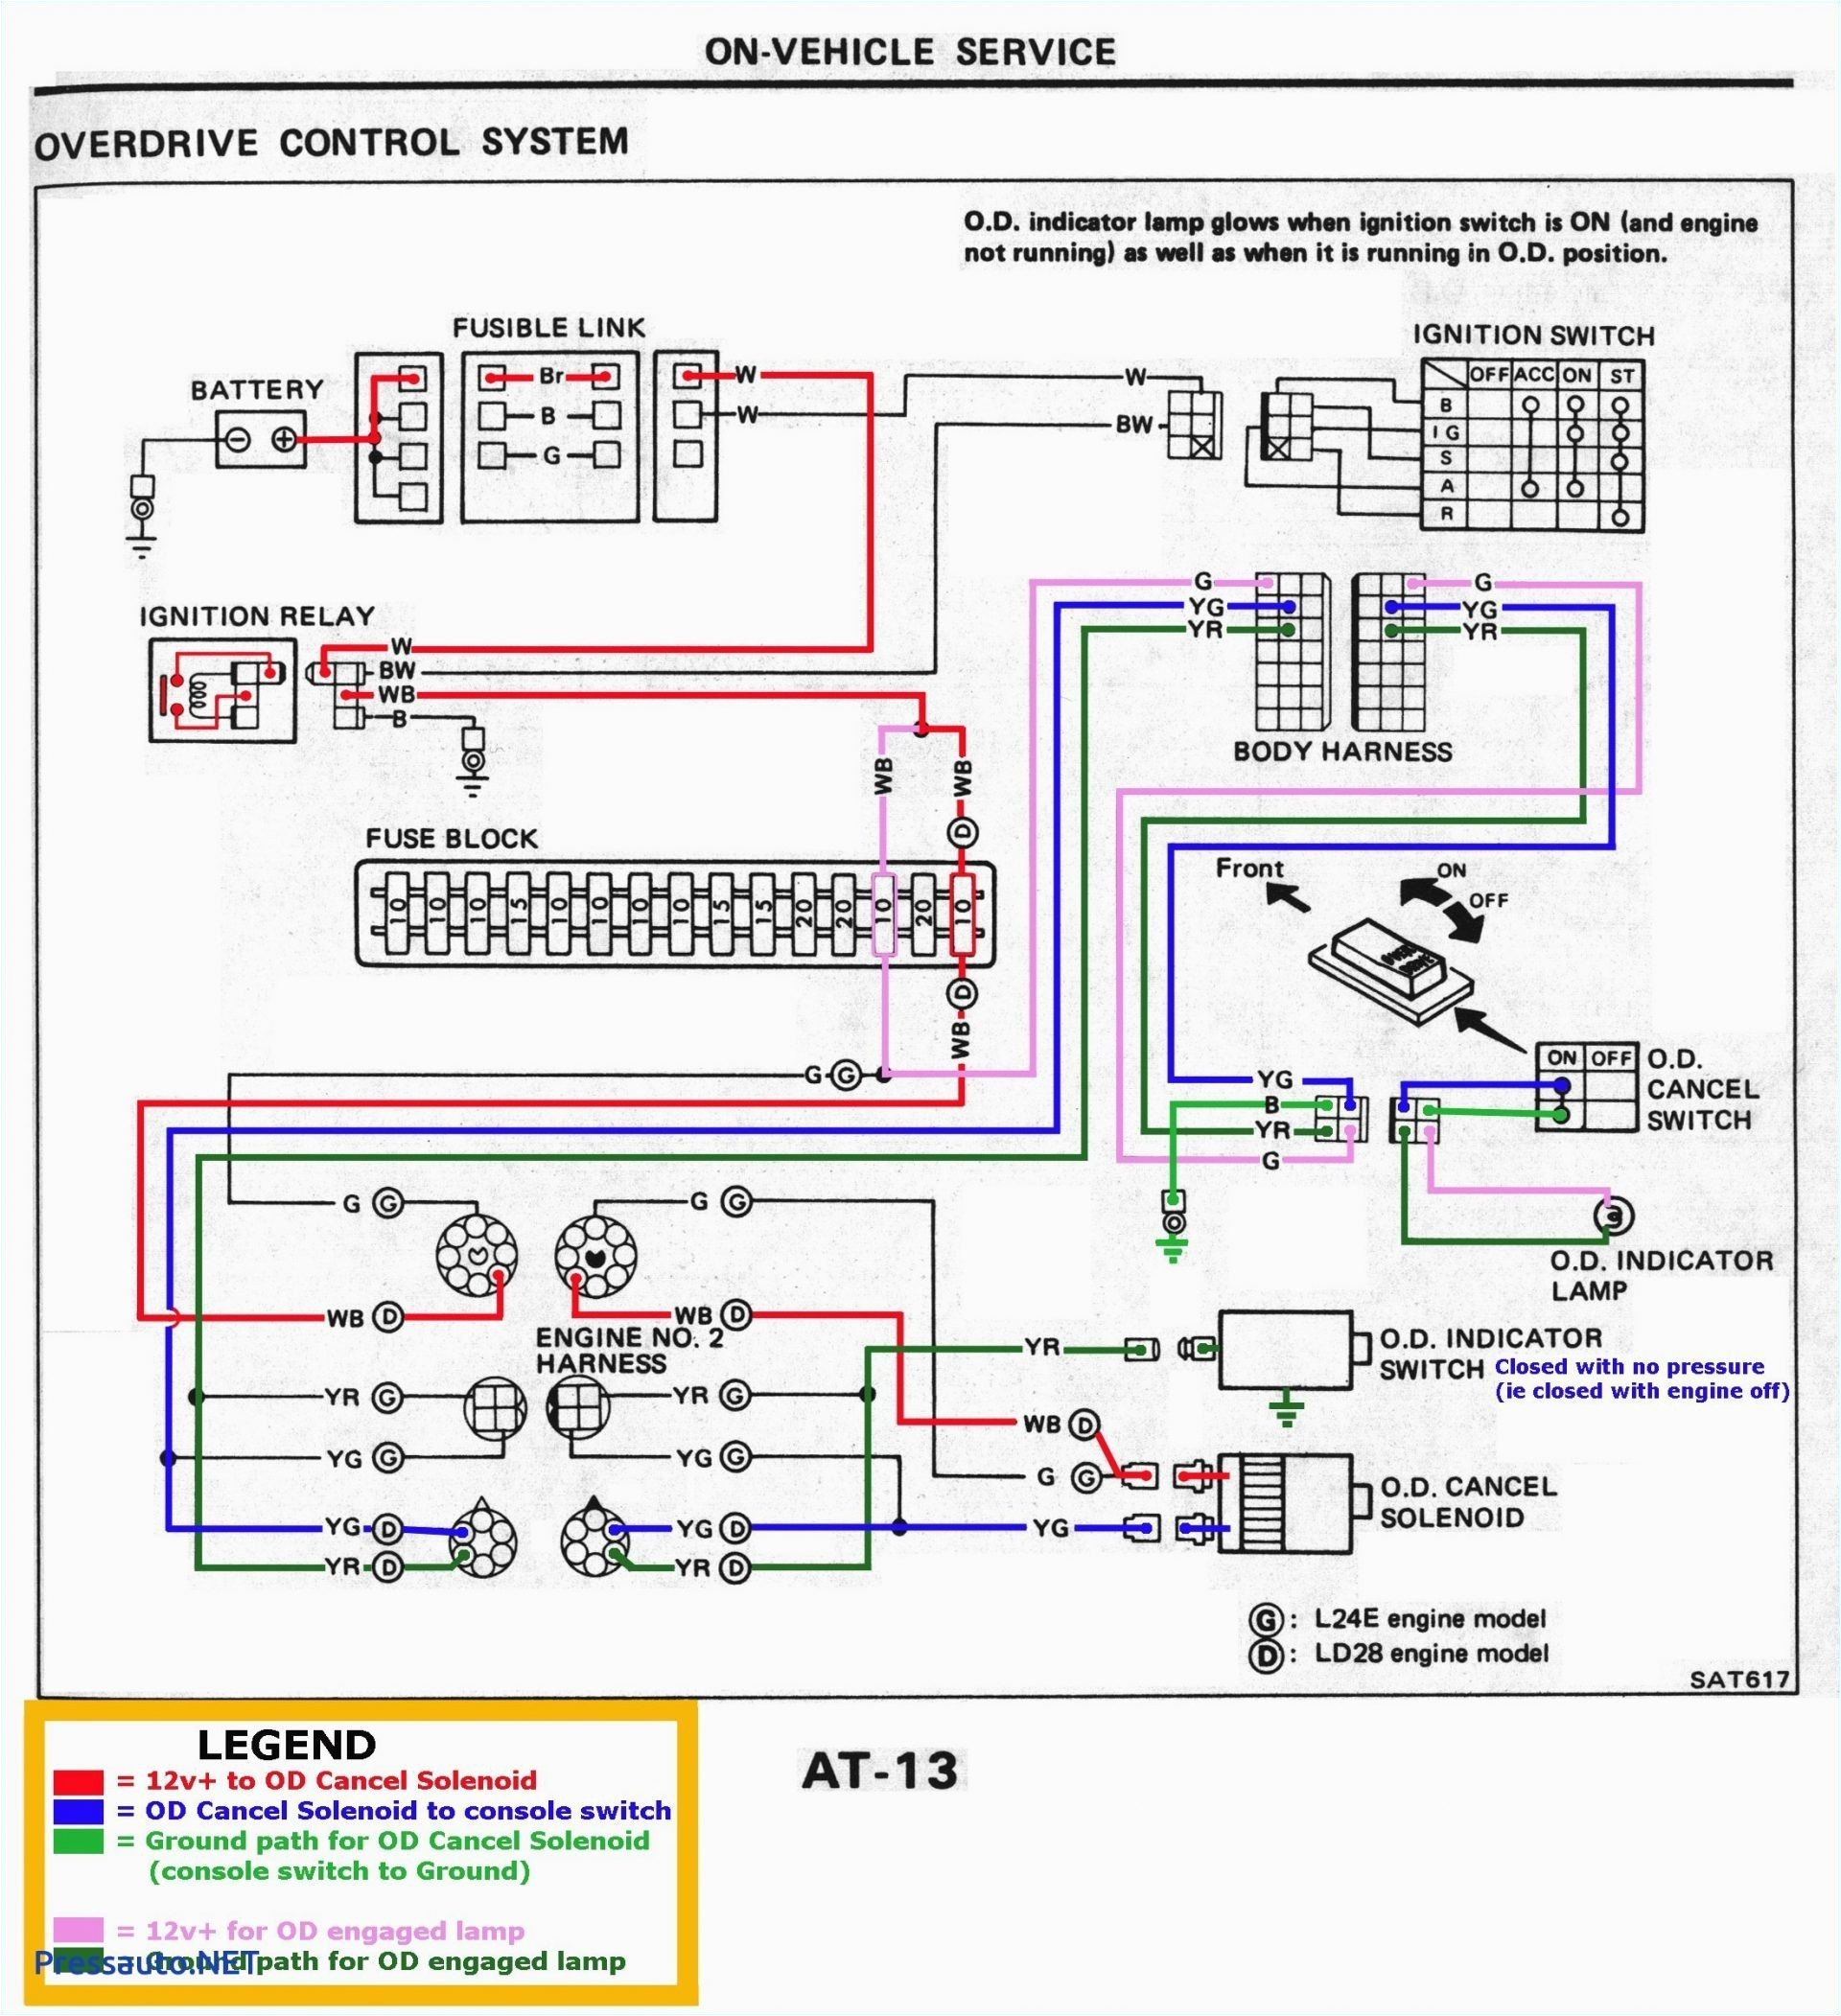 emergency vehicle wiring harness wiring diagram datasource emergency vehicle wiring diagram wiring diagram technic emergency vehicle